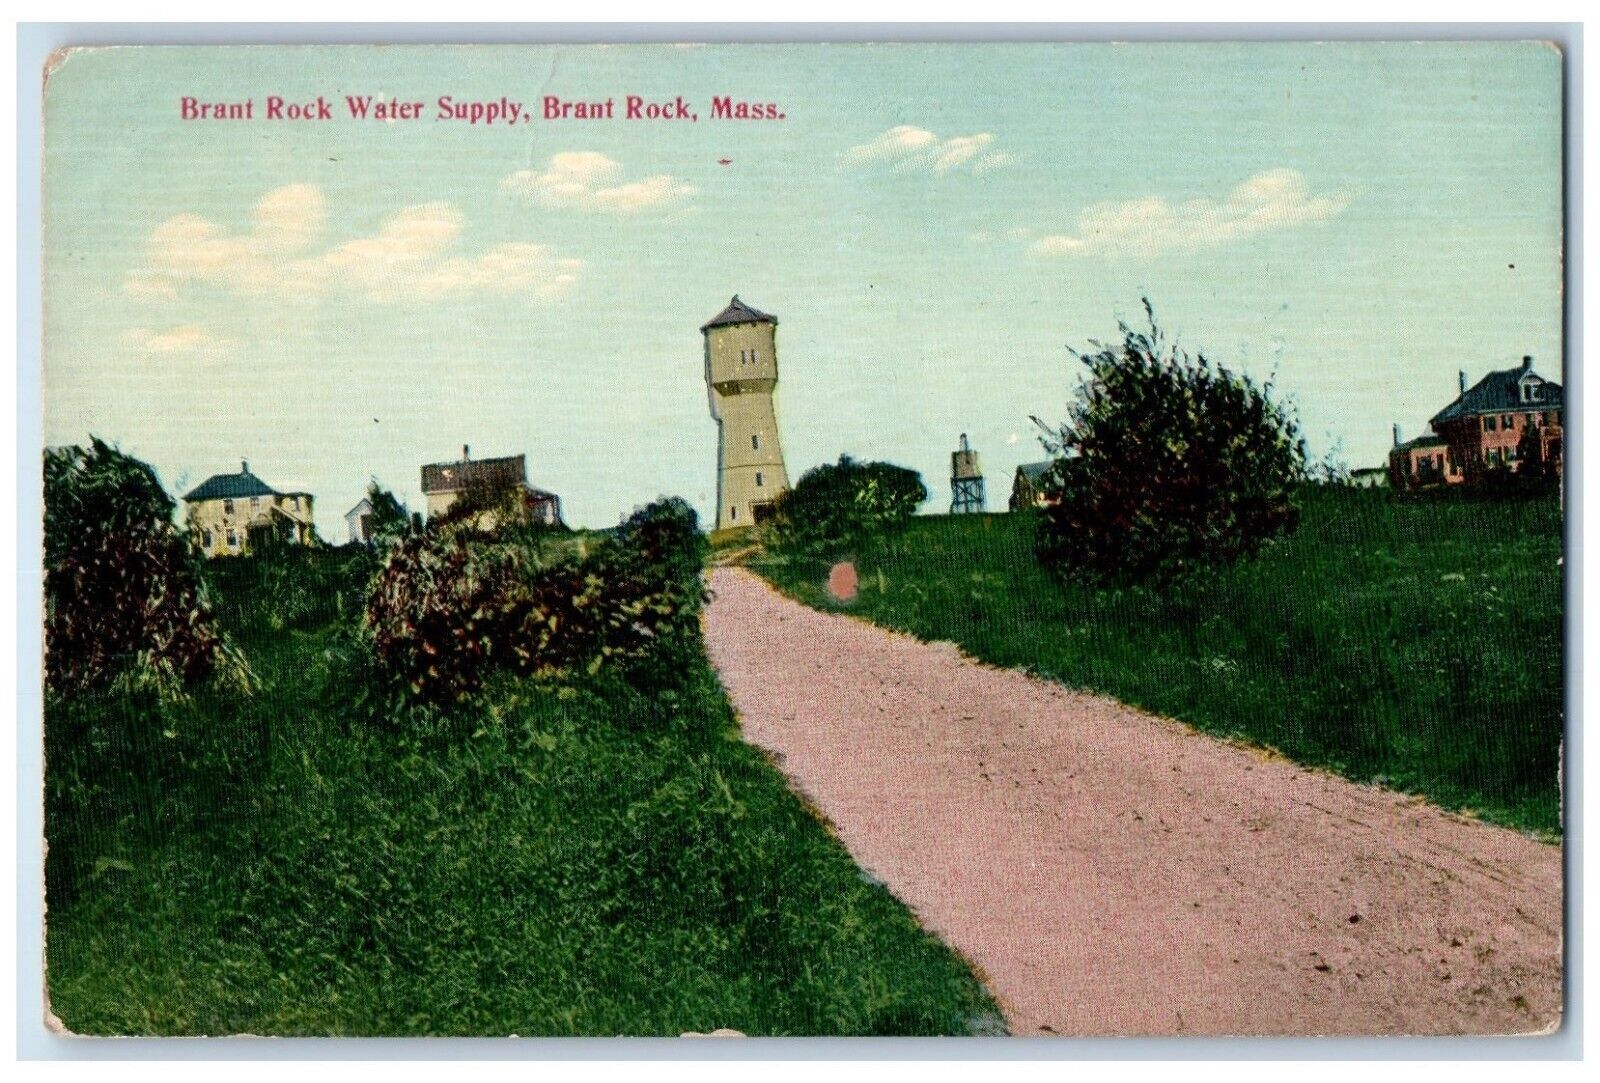 c1910 Brant Rock Water Supply Brant Rock Massachusetts Vintage Antique Postcard